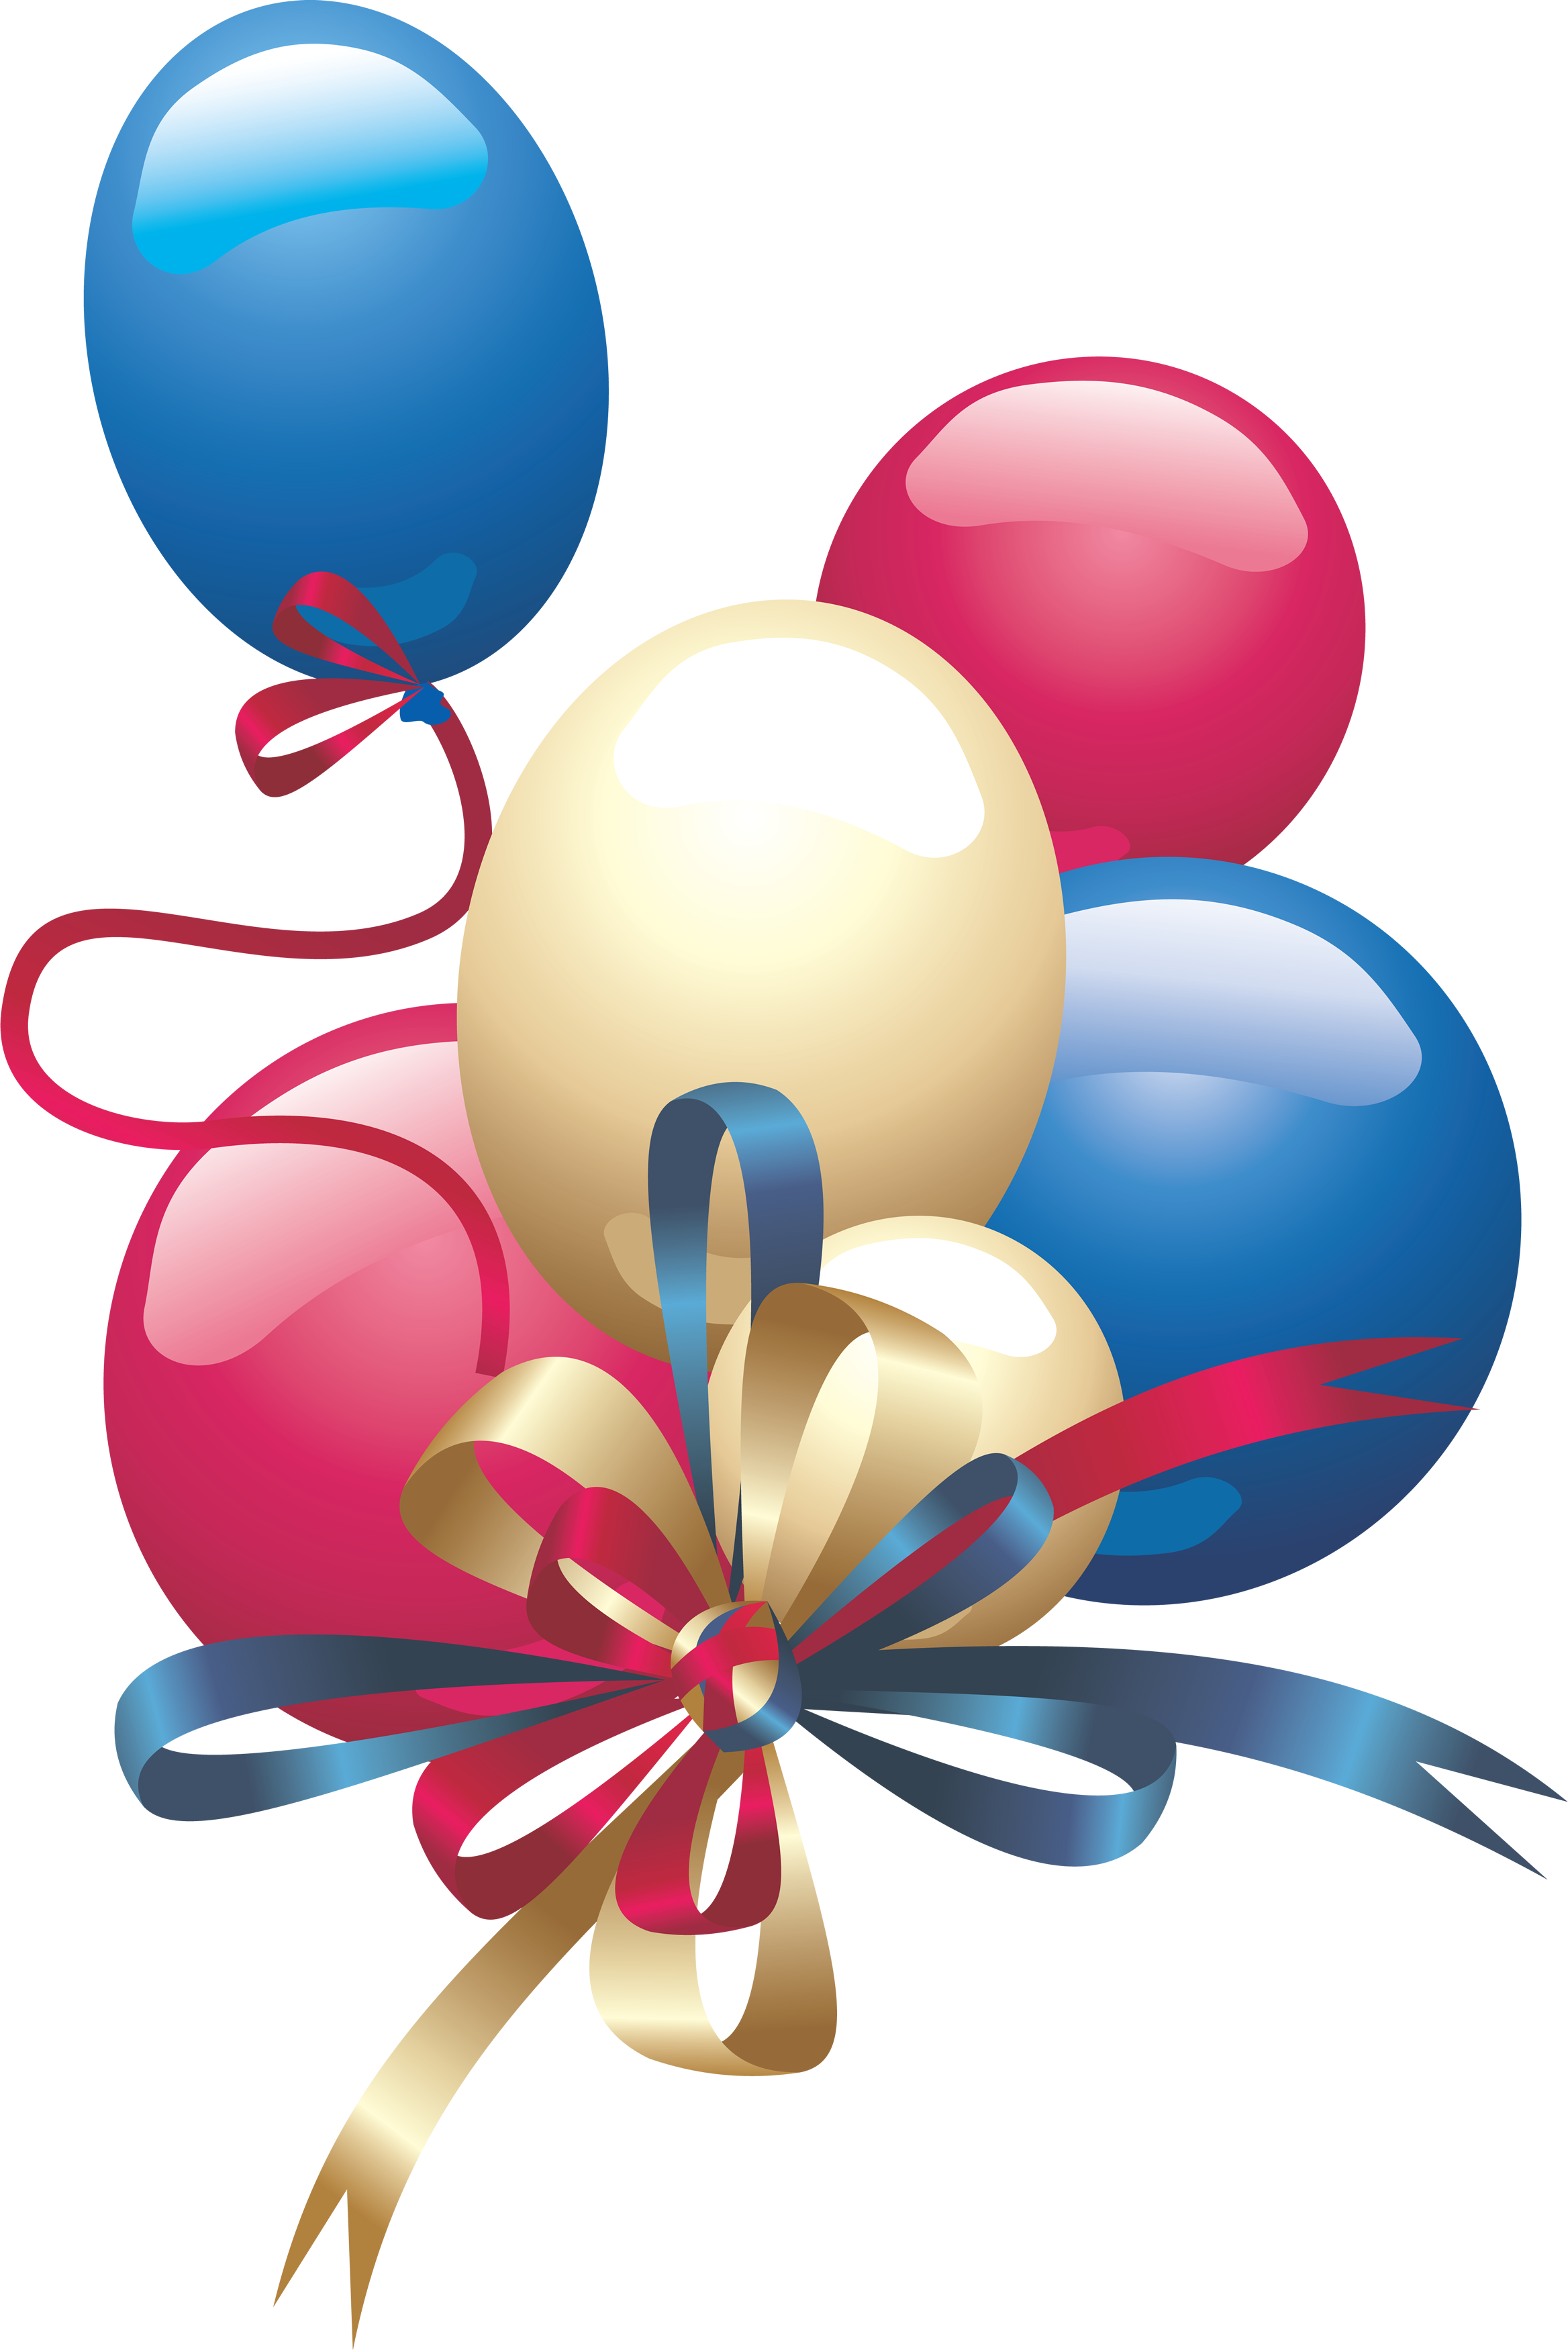 Balloons PNG unduh gratis